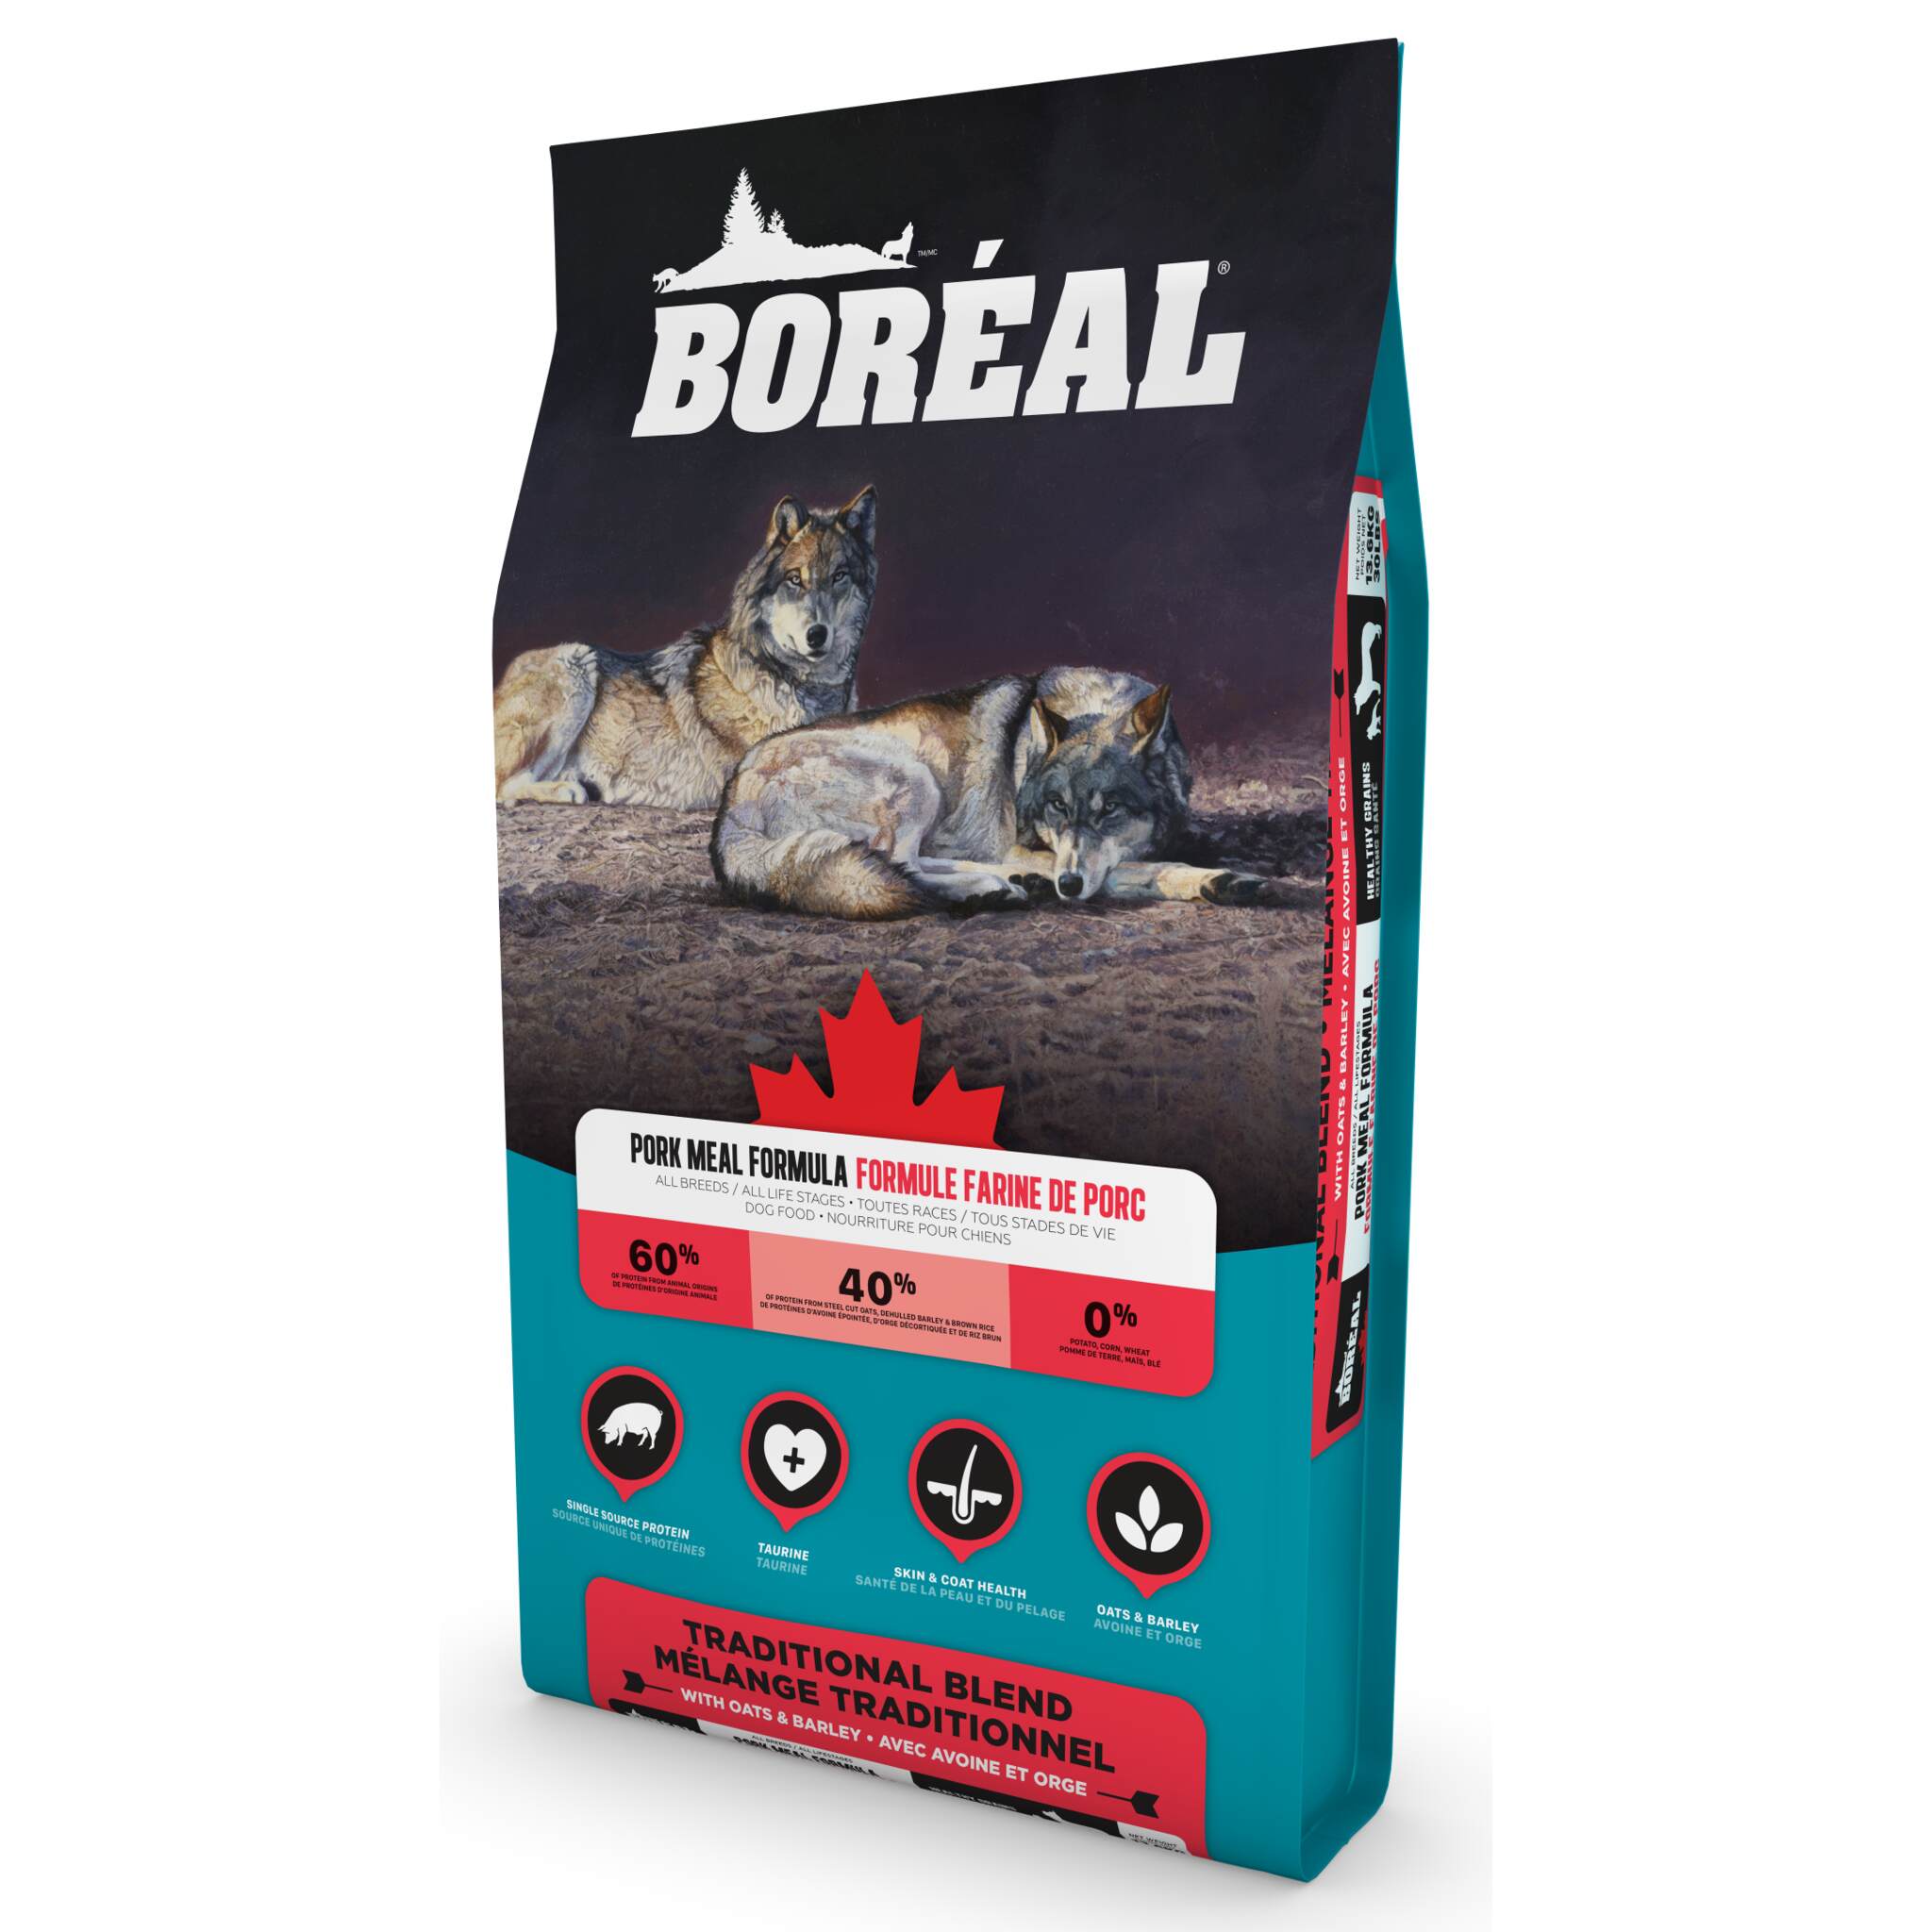 Boreal dry dog food, traditional blend, Pork meal recipe, 37 lb.